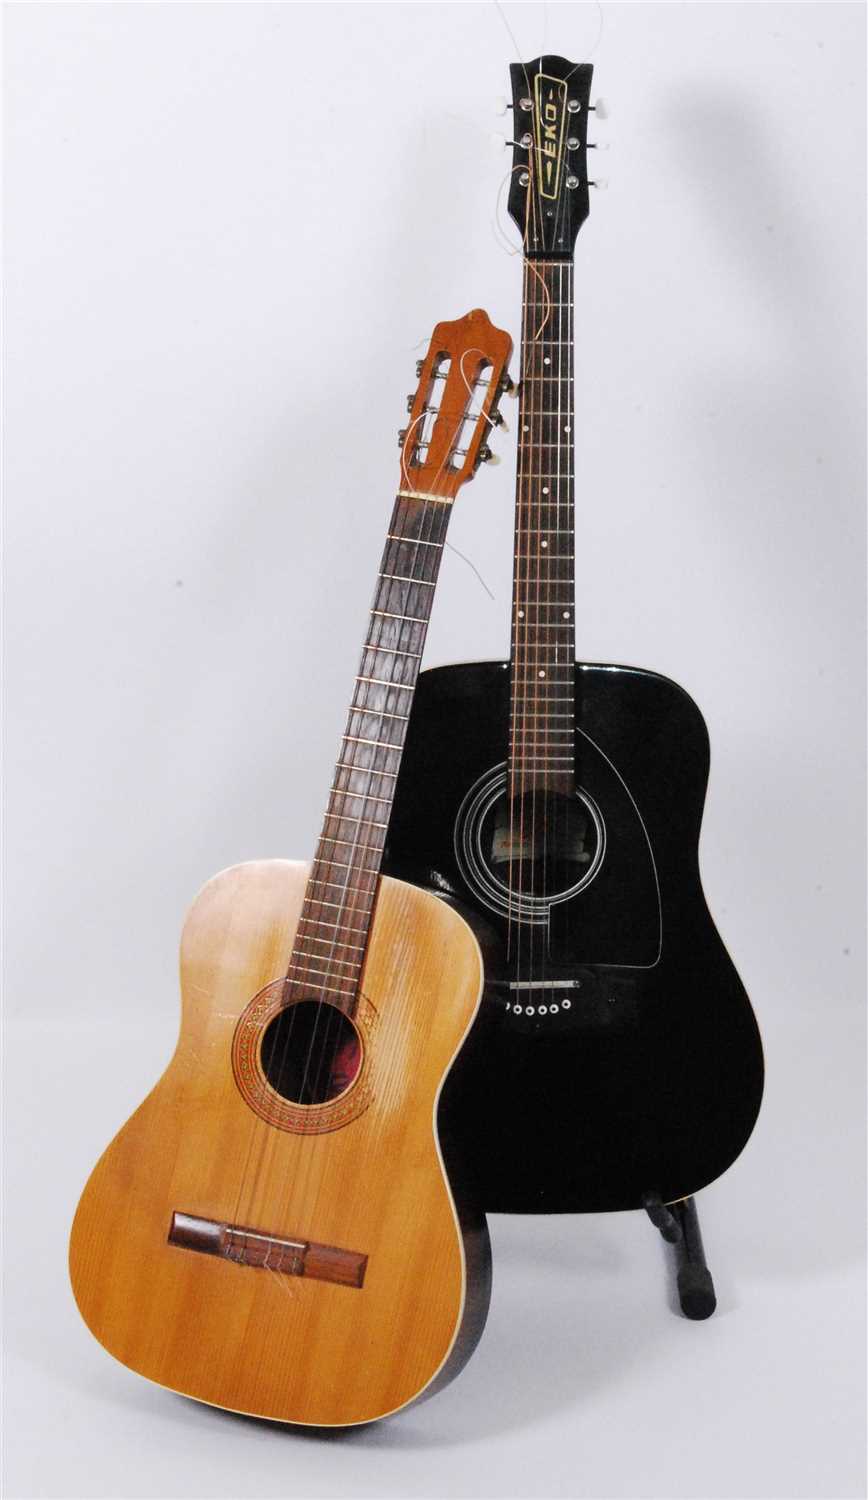 Lot 615 - An Eko acoustic guitar